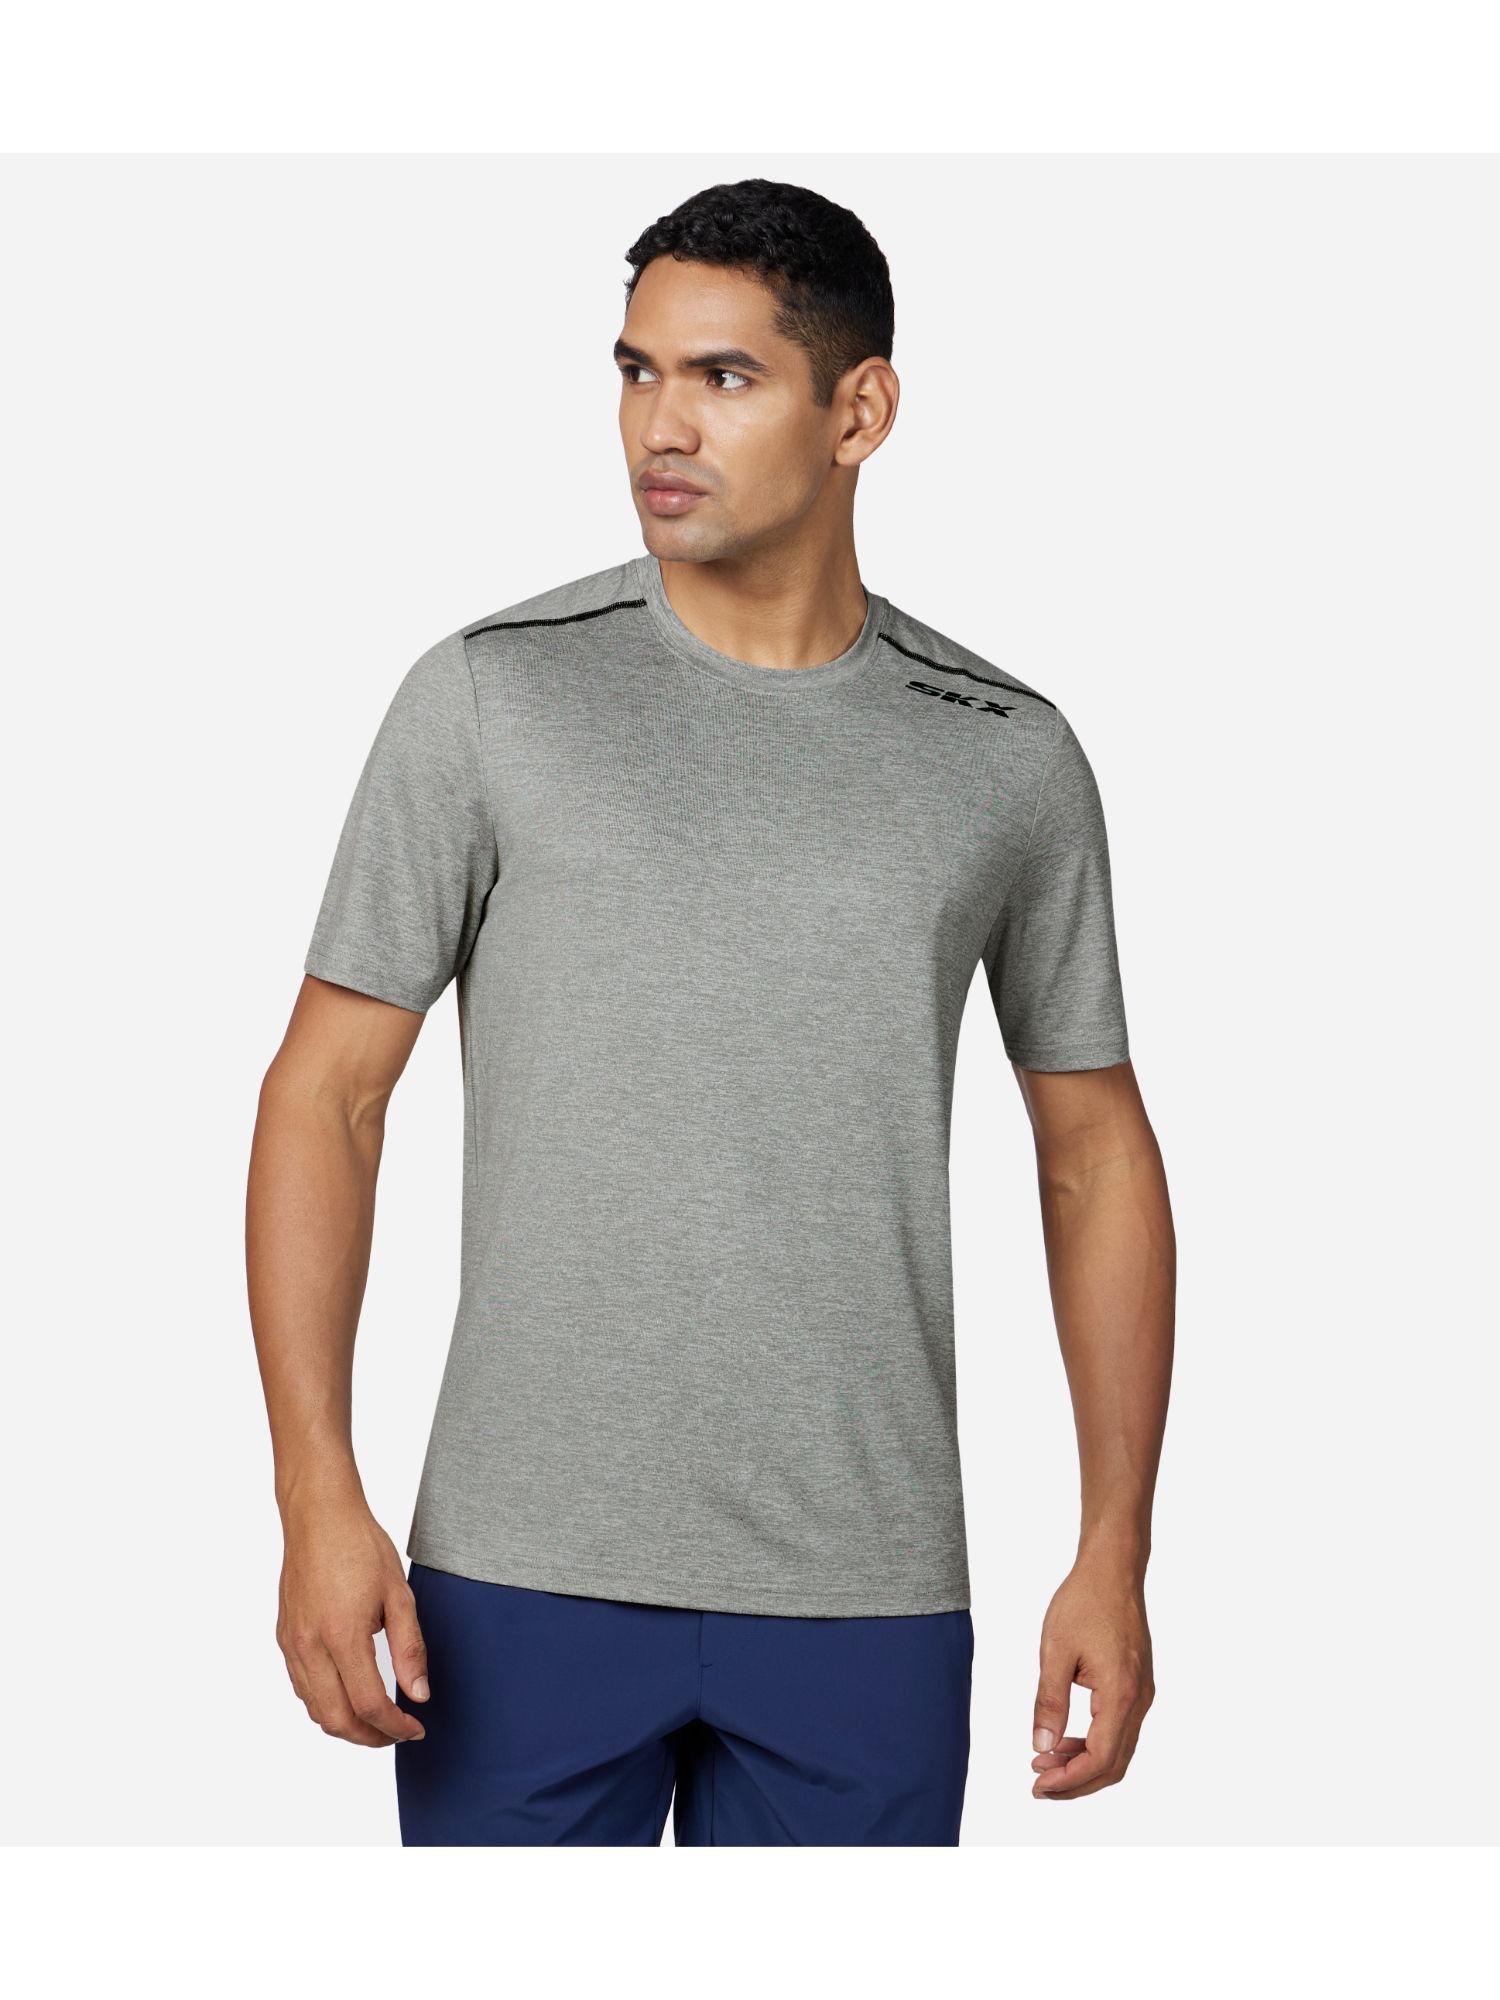 godri-swift-tee-t-shirt-grey